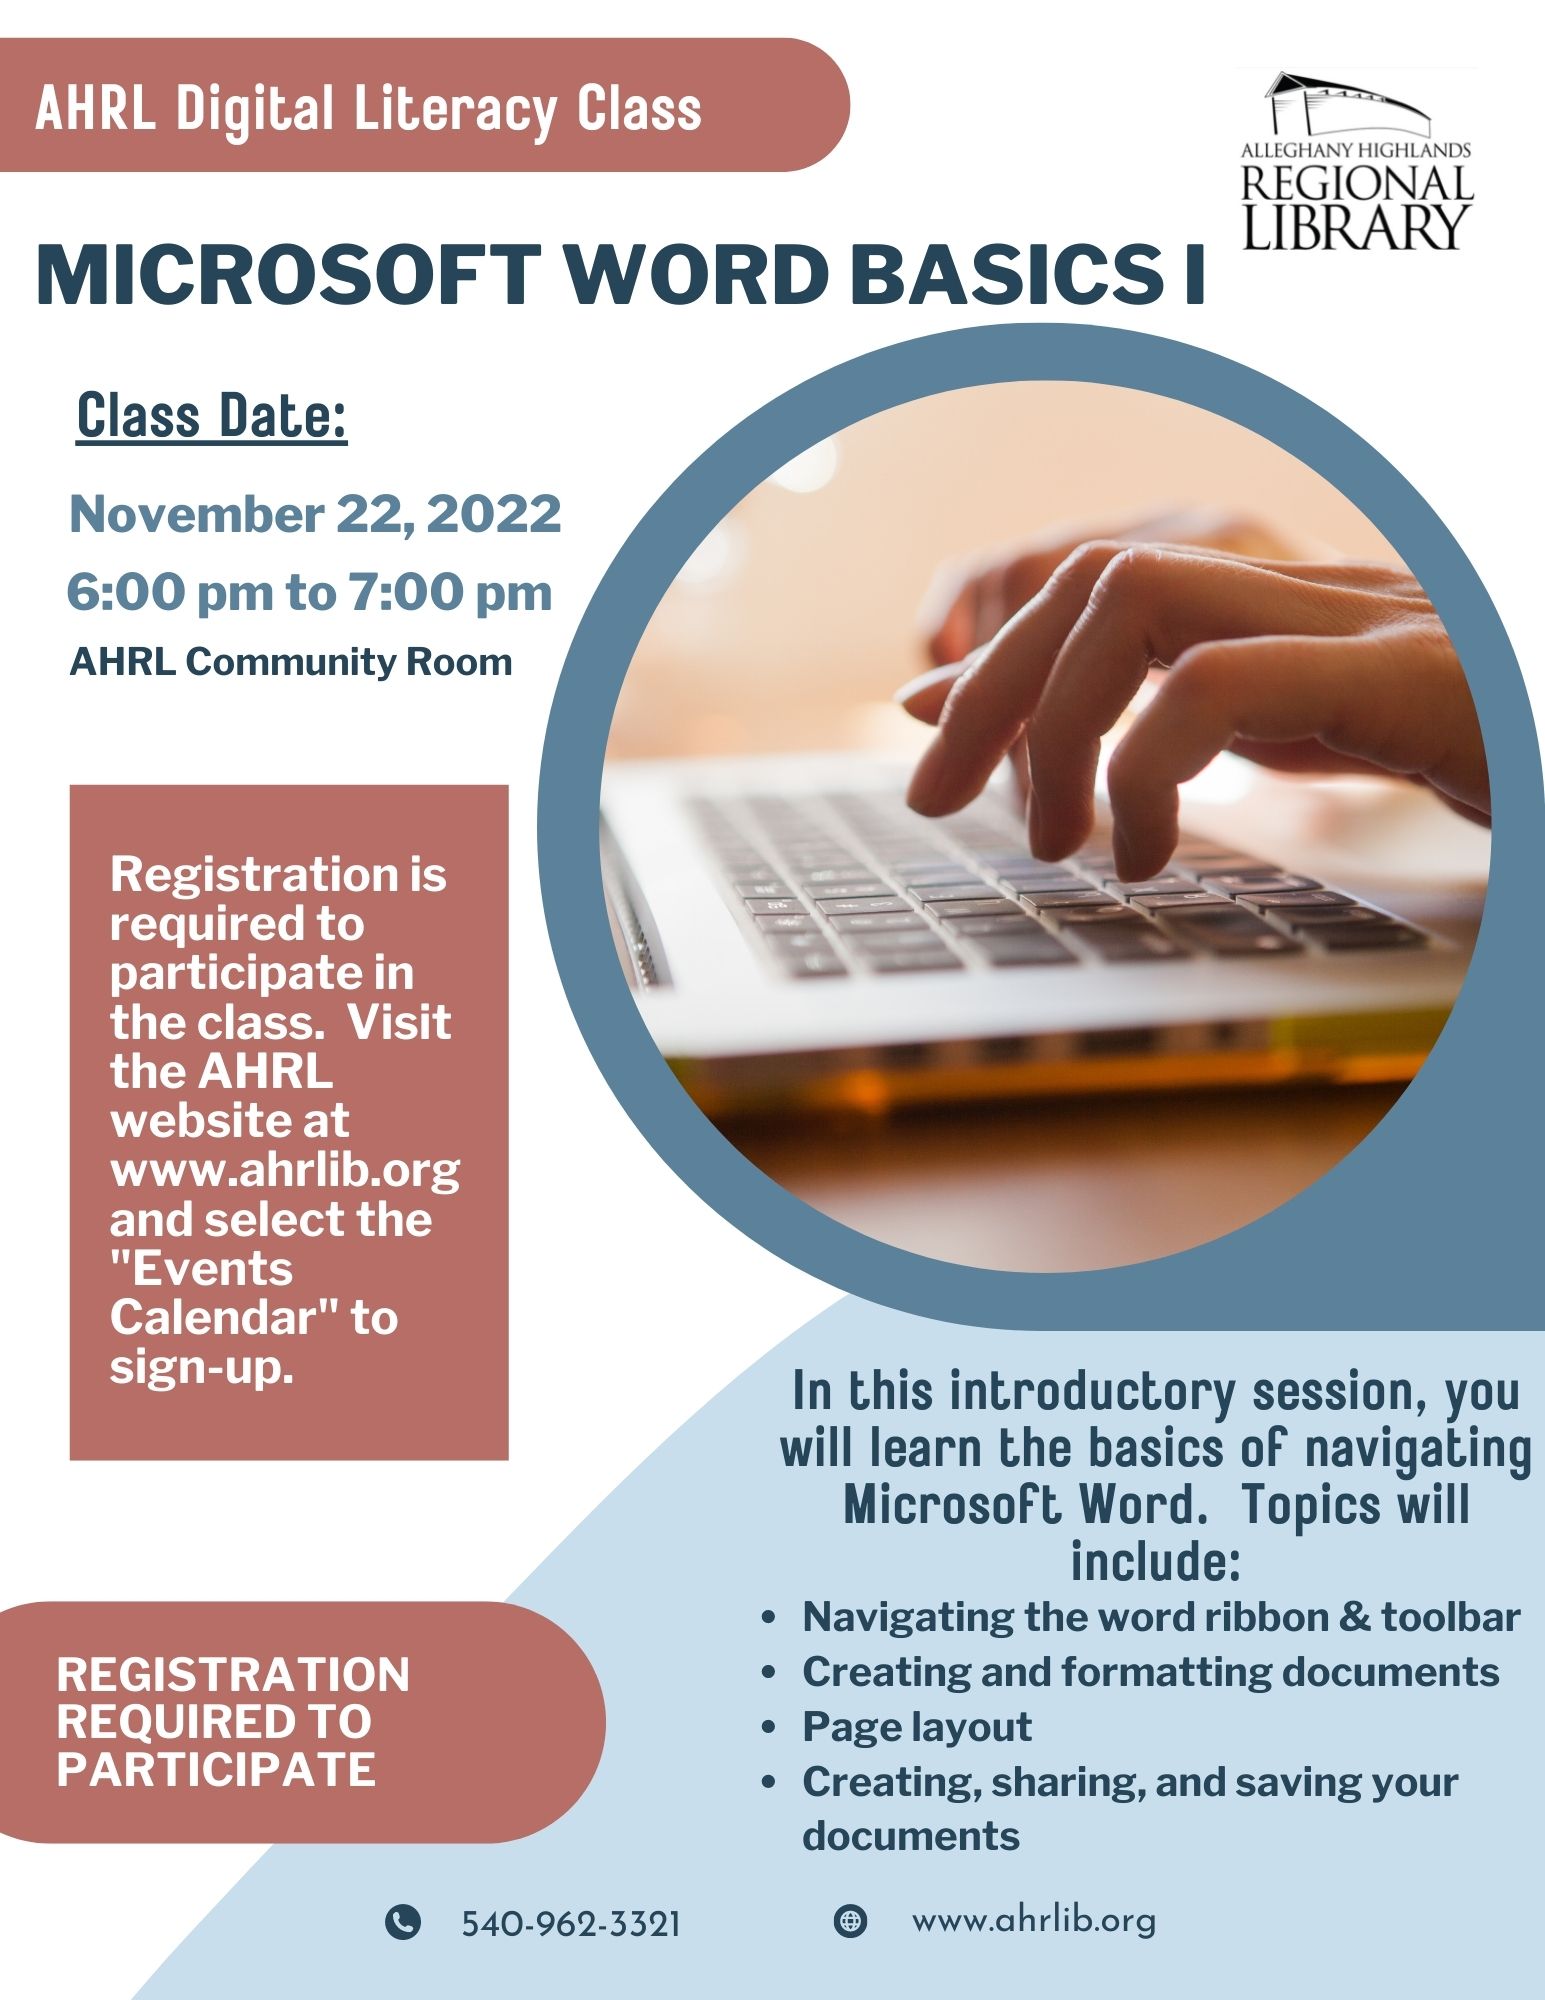 AHRL Digital Literacy Class Flyer--Word Processing Basics